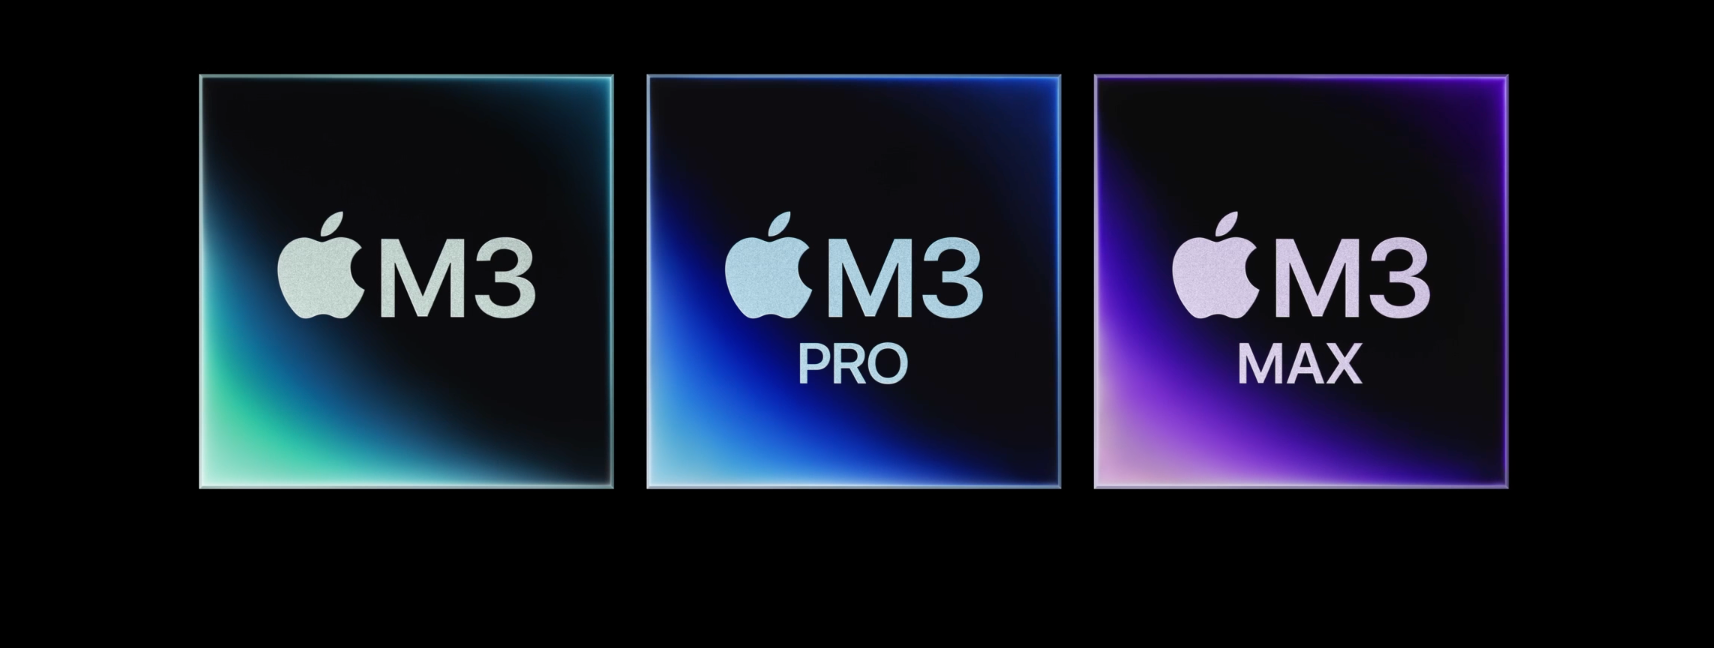 15 MacBook Air, 12 MacBook & M3 SoC are expected to arrive in 2023